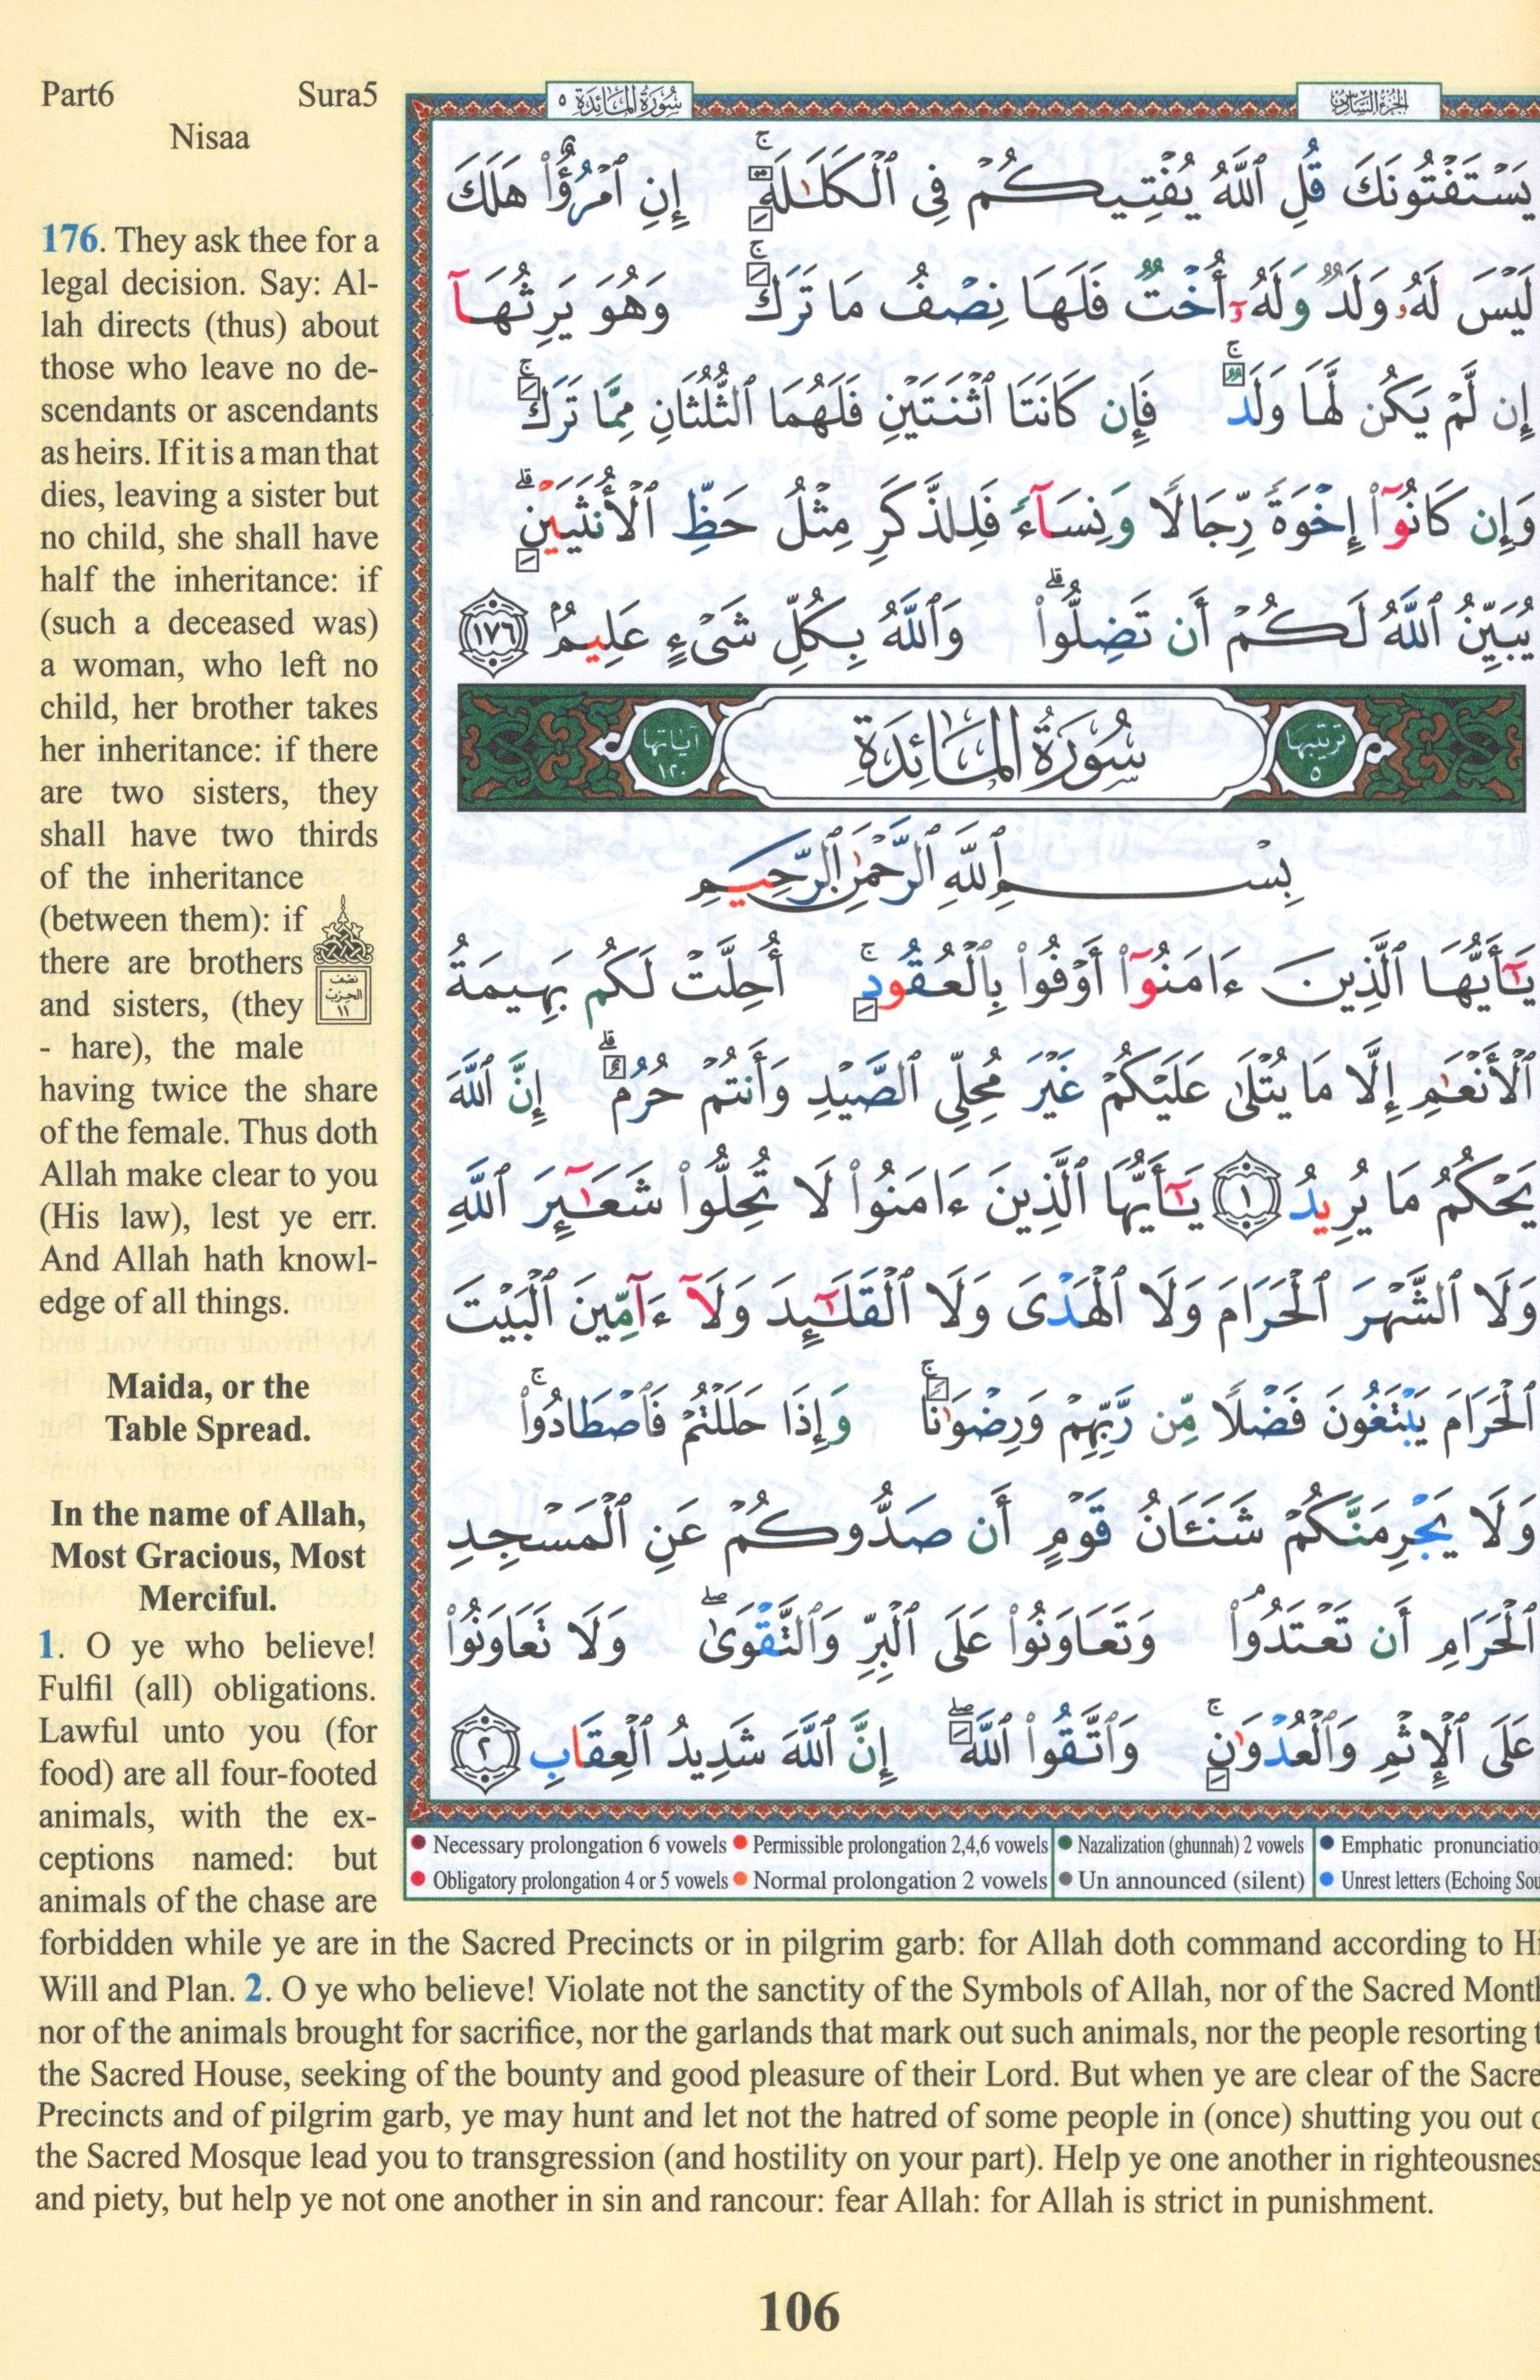 Tajweed Quran with English Translation 7 x 9